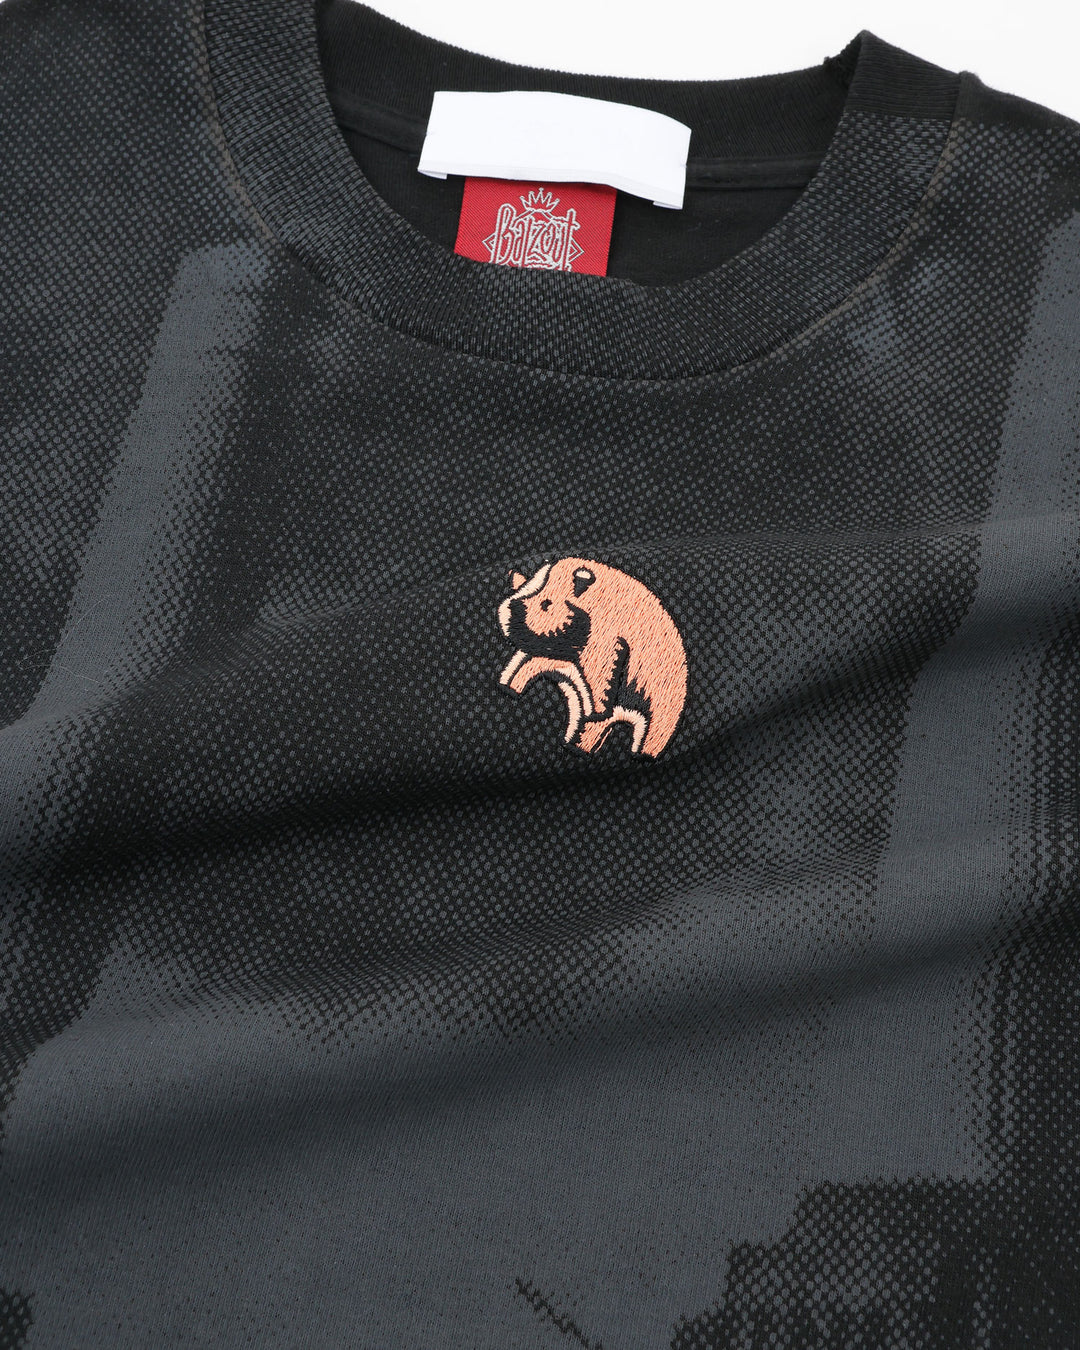 PINK FLOYD T-Shirt / Black